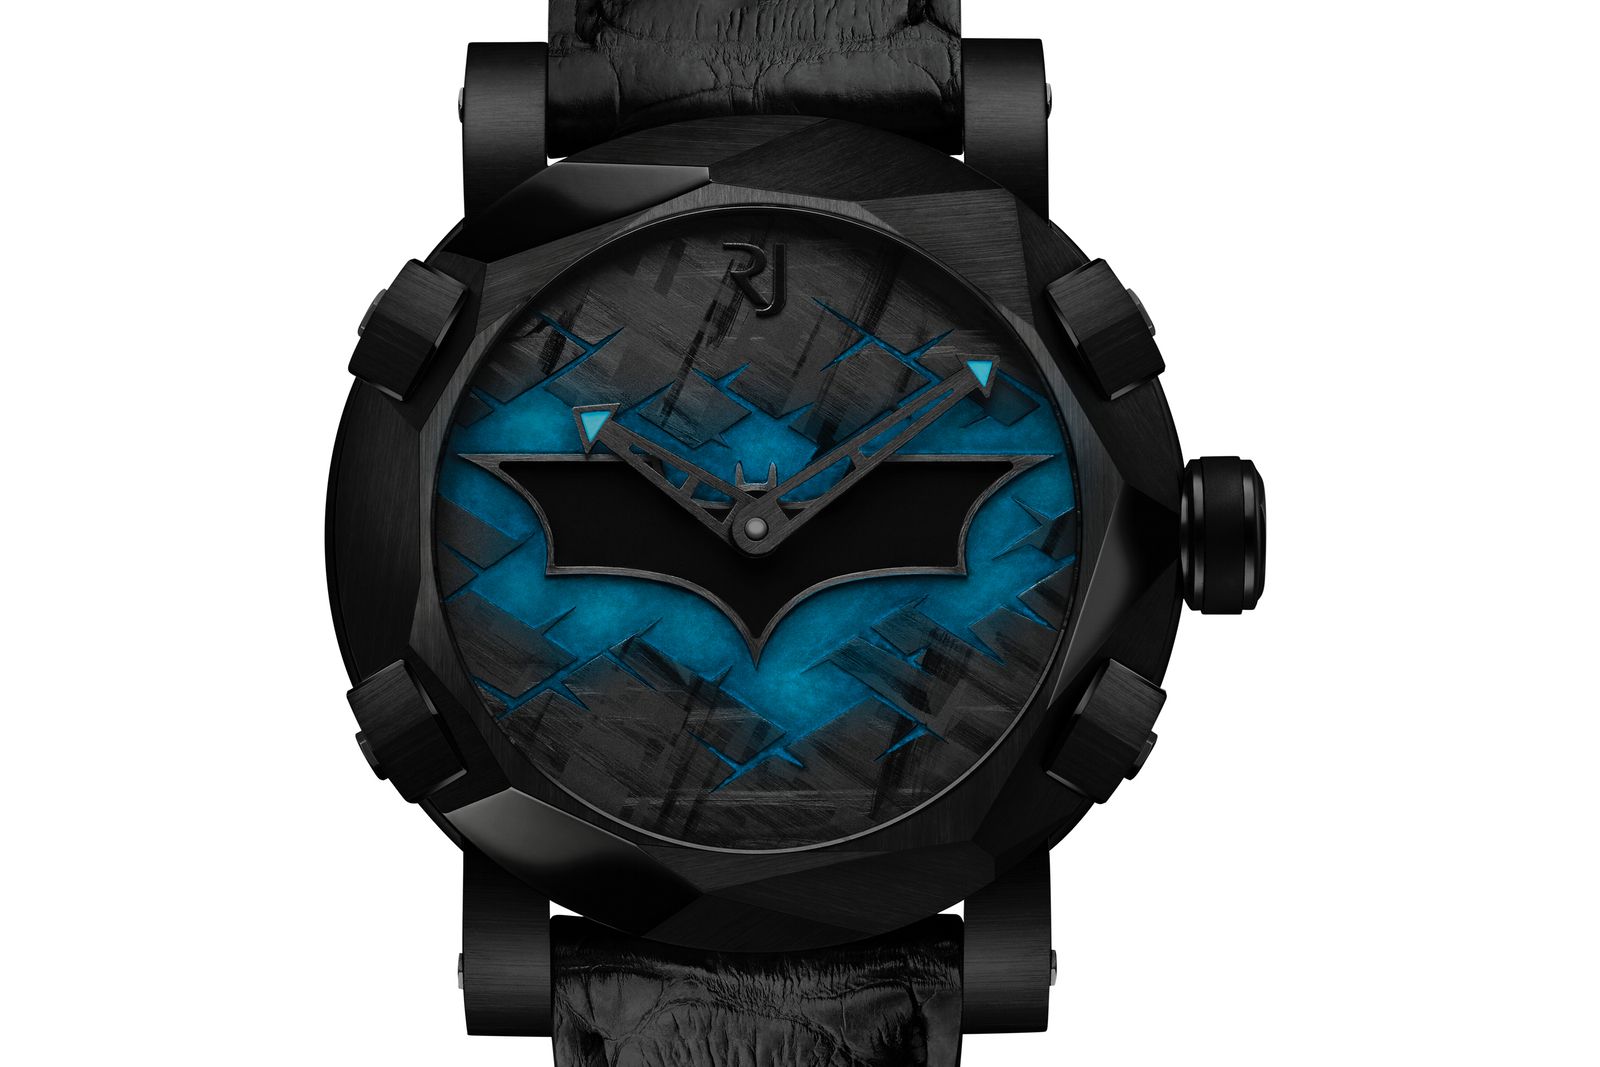 Часы Бэтмен Romain Jerome. Romain Jerome MB.F2.22BB.11. Romain Jerome логотип. Часы с Бэтменом мужские.